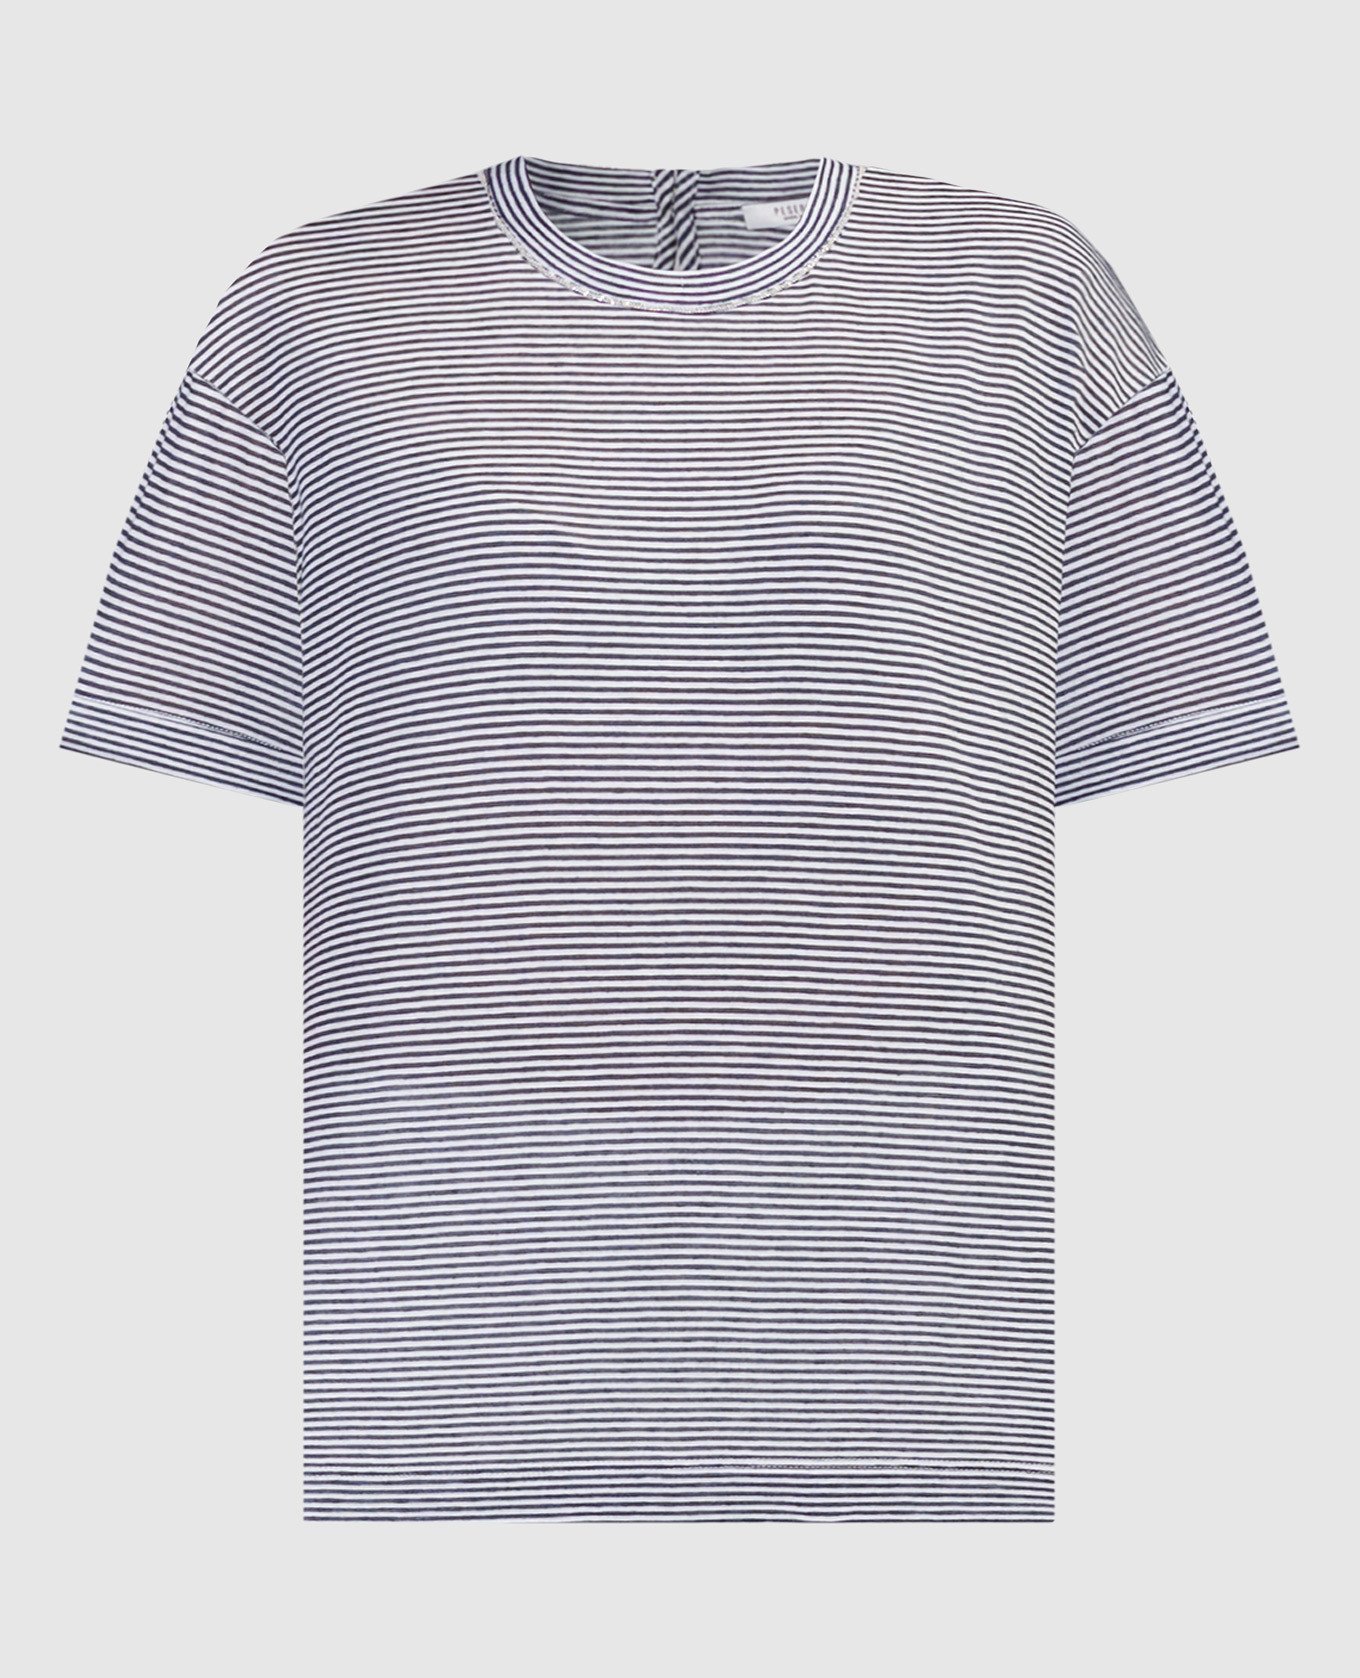 Blue striped t-shirt with monil chain